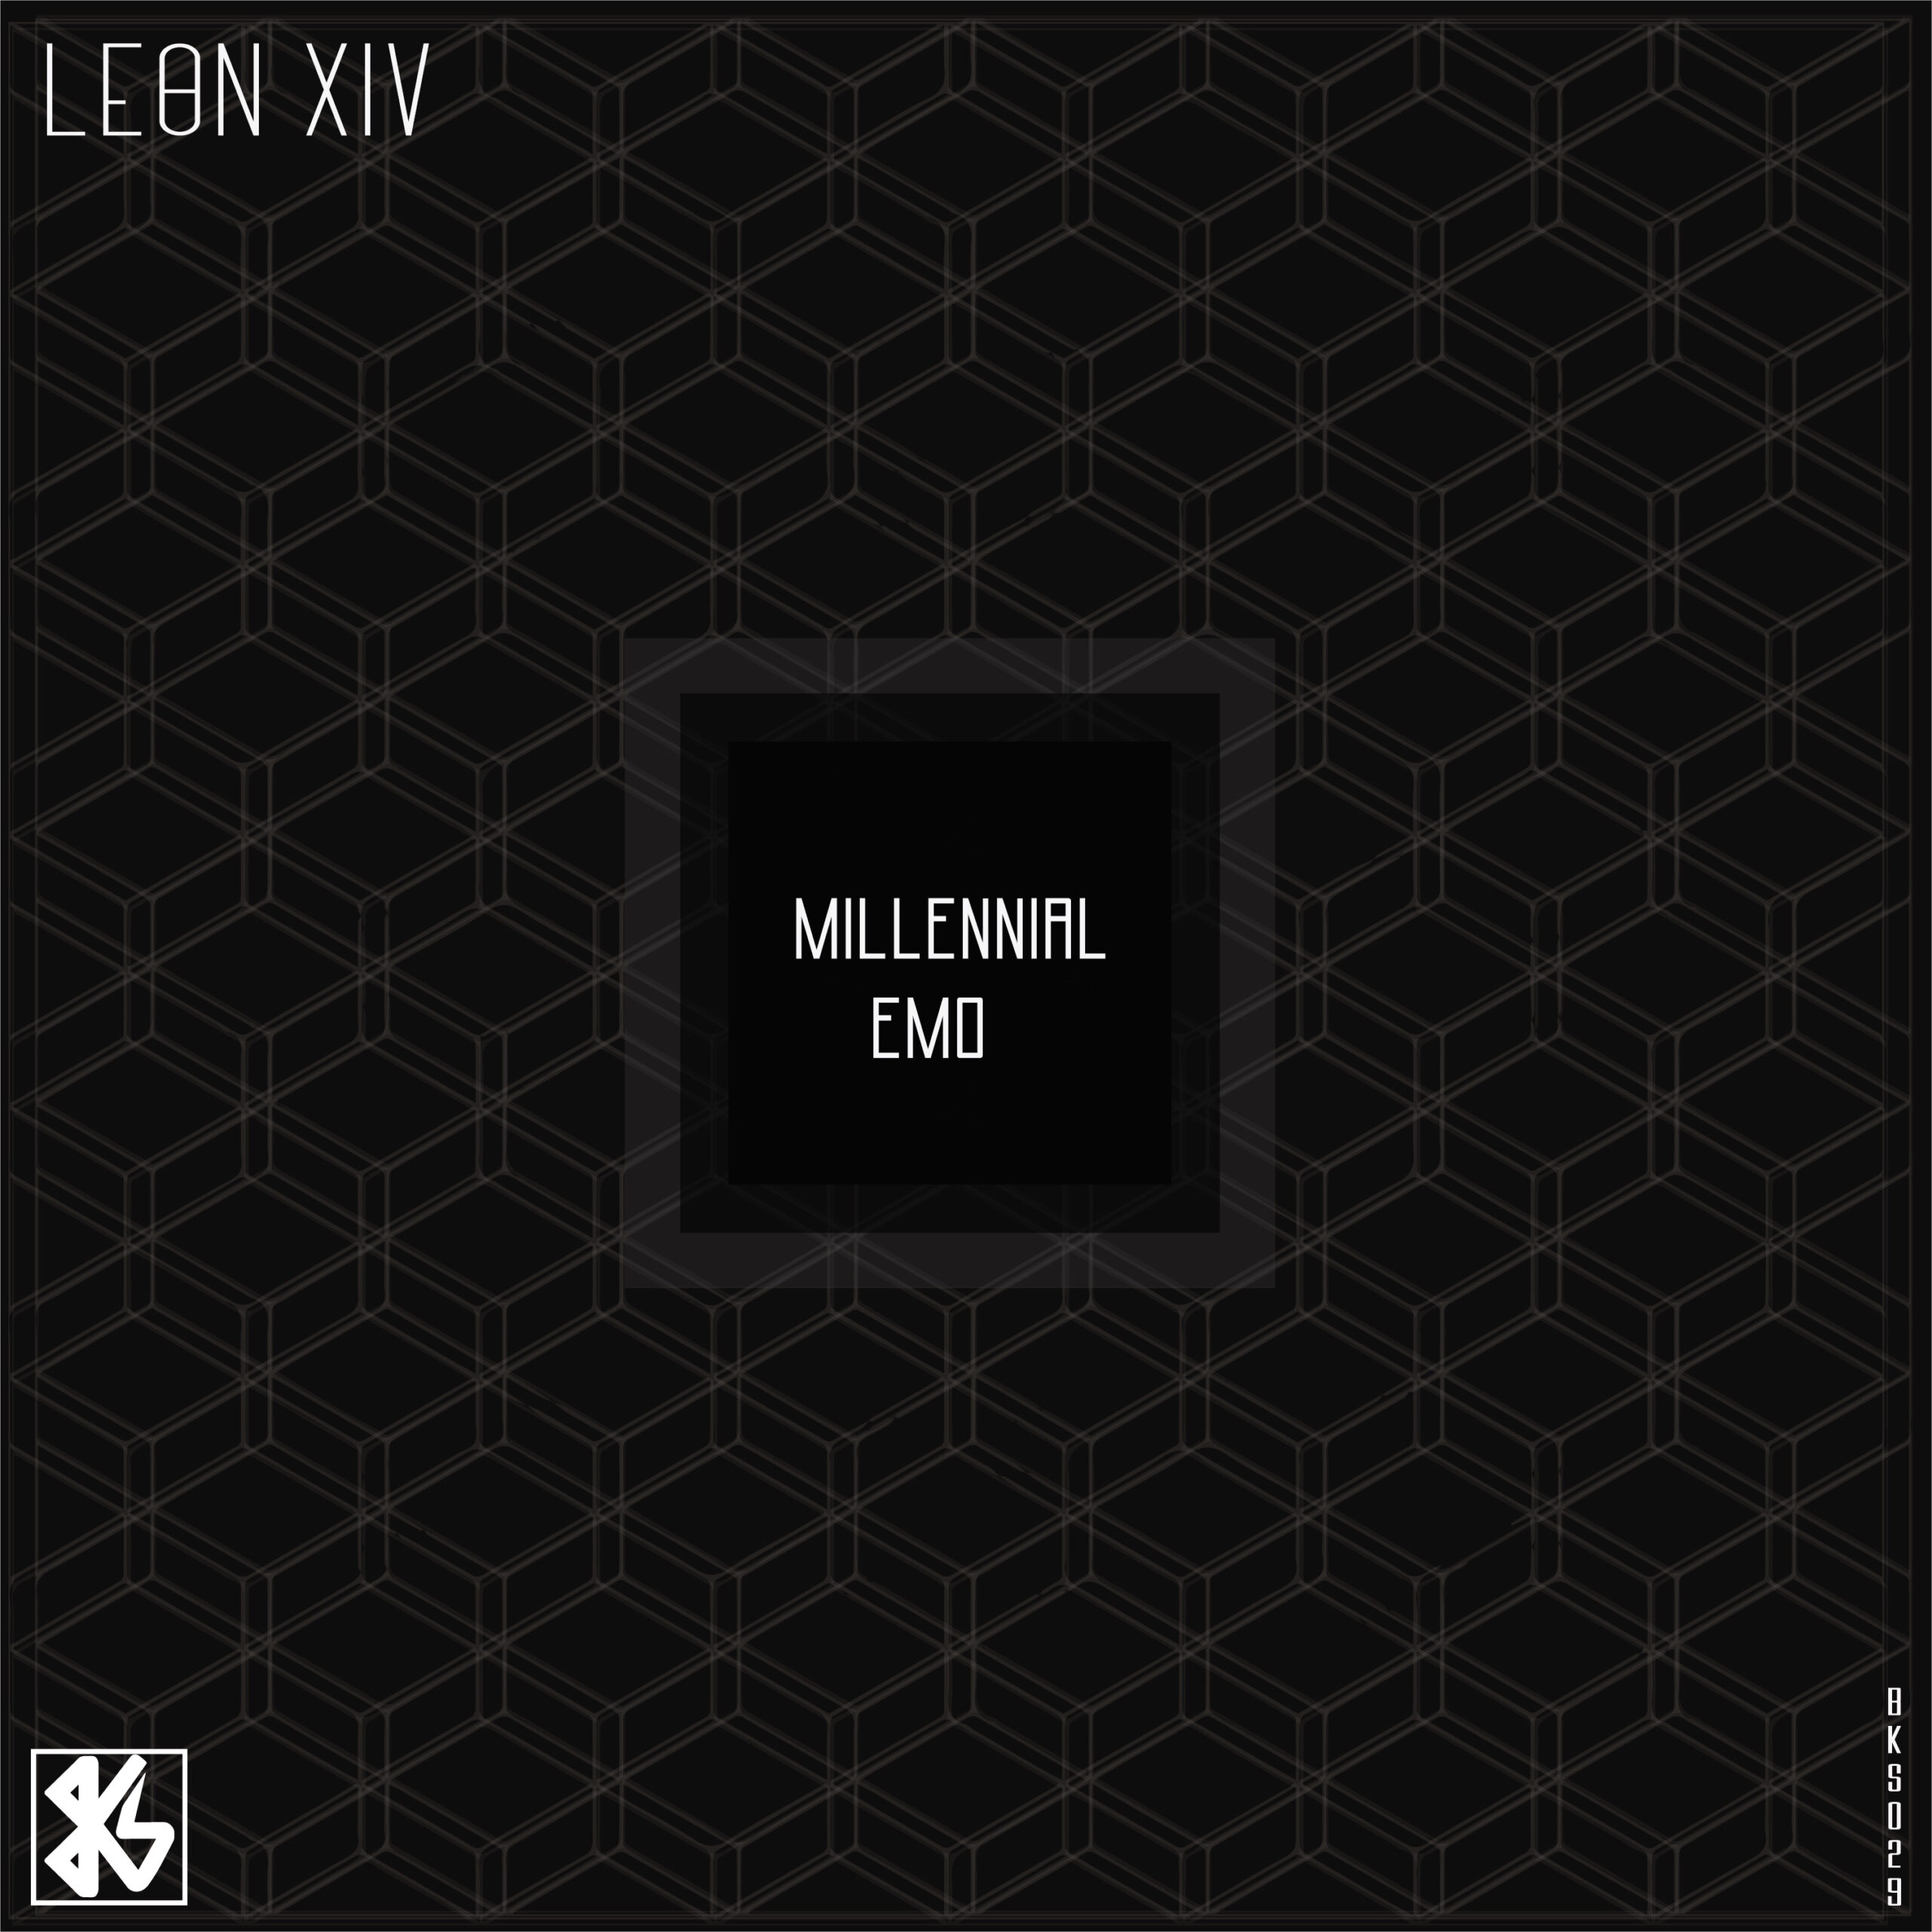 PREMIERE: Leon XIV - Millennial Emo (Ludviq Remix) [Bonkers Records]